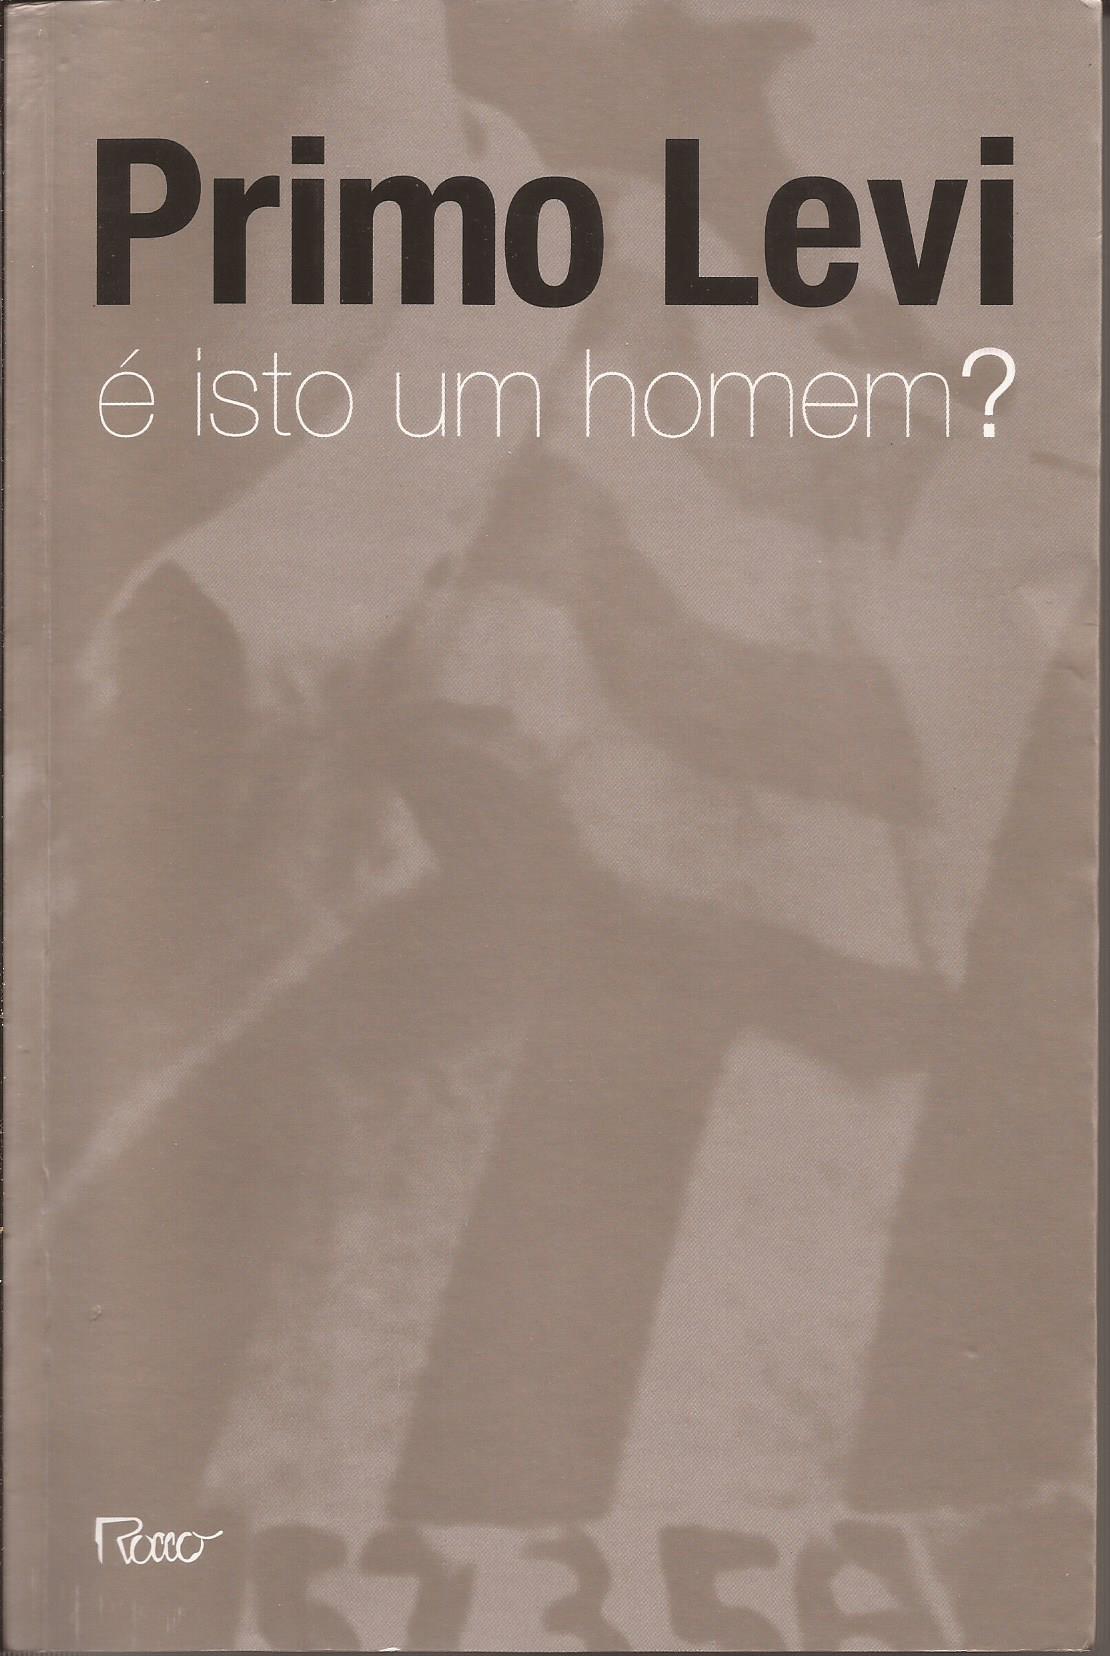 https://www.literaturabrasileira.ufsc.br/_images/obras/e__isto_um_homem_1988_ok.jpg